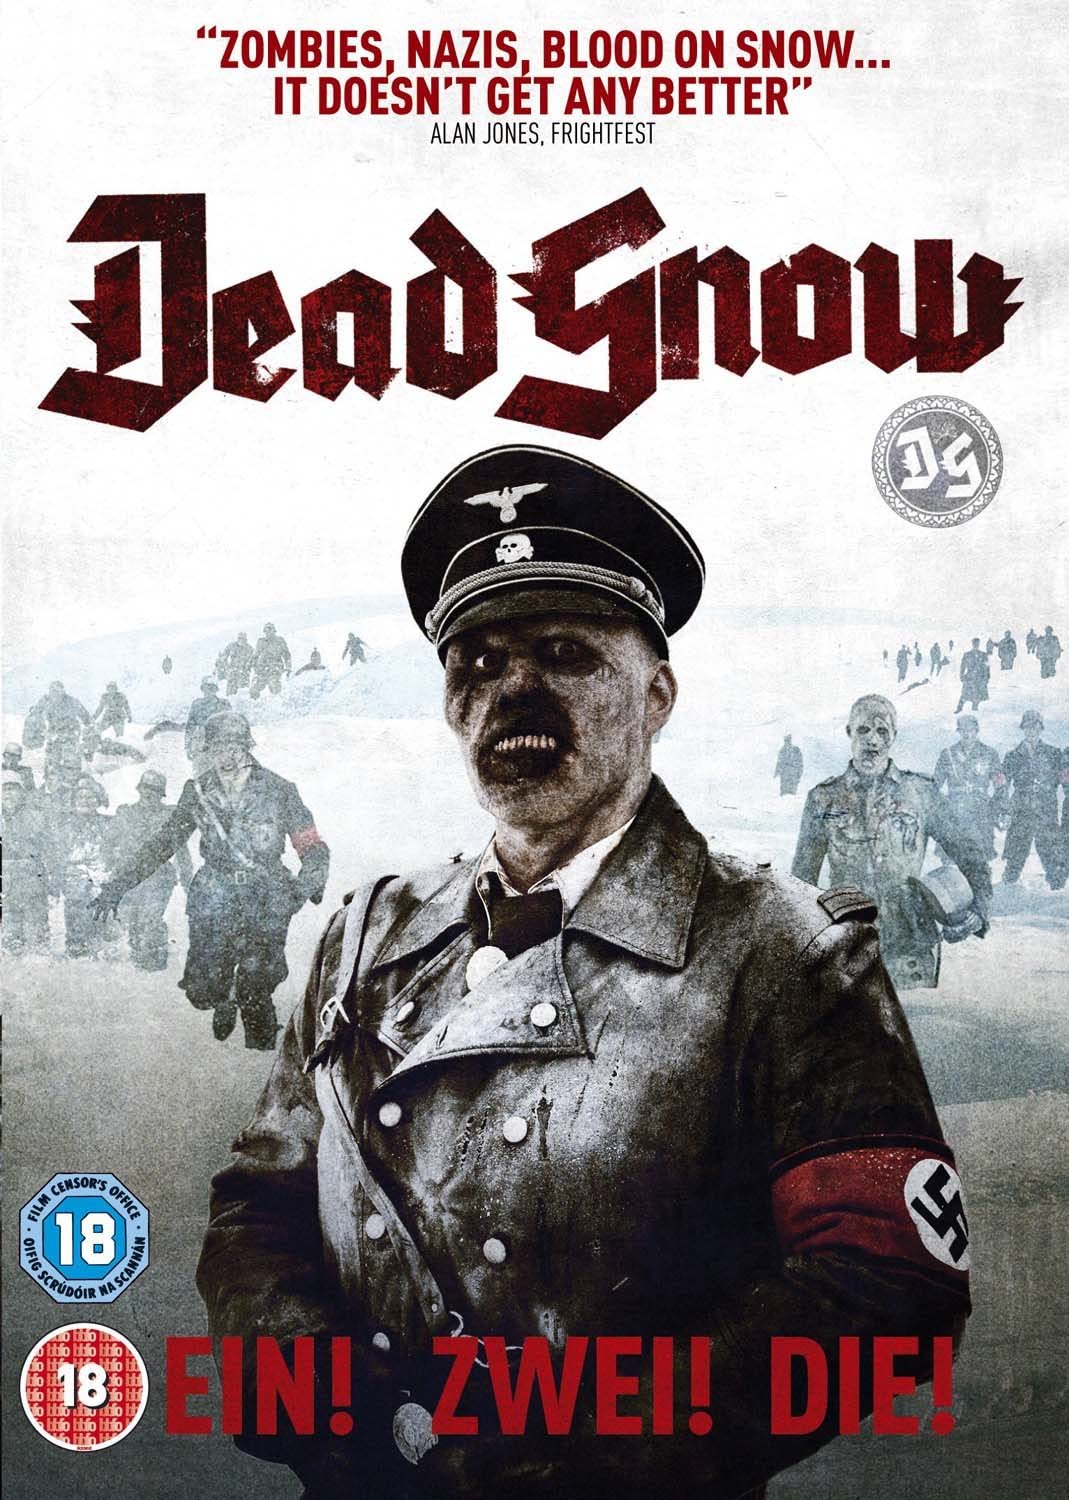 Dead Snow (DVD)